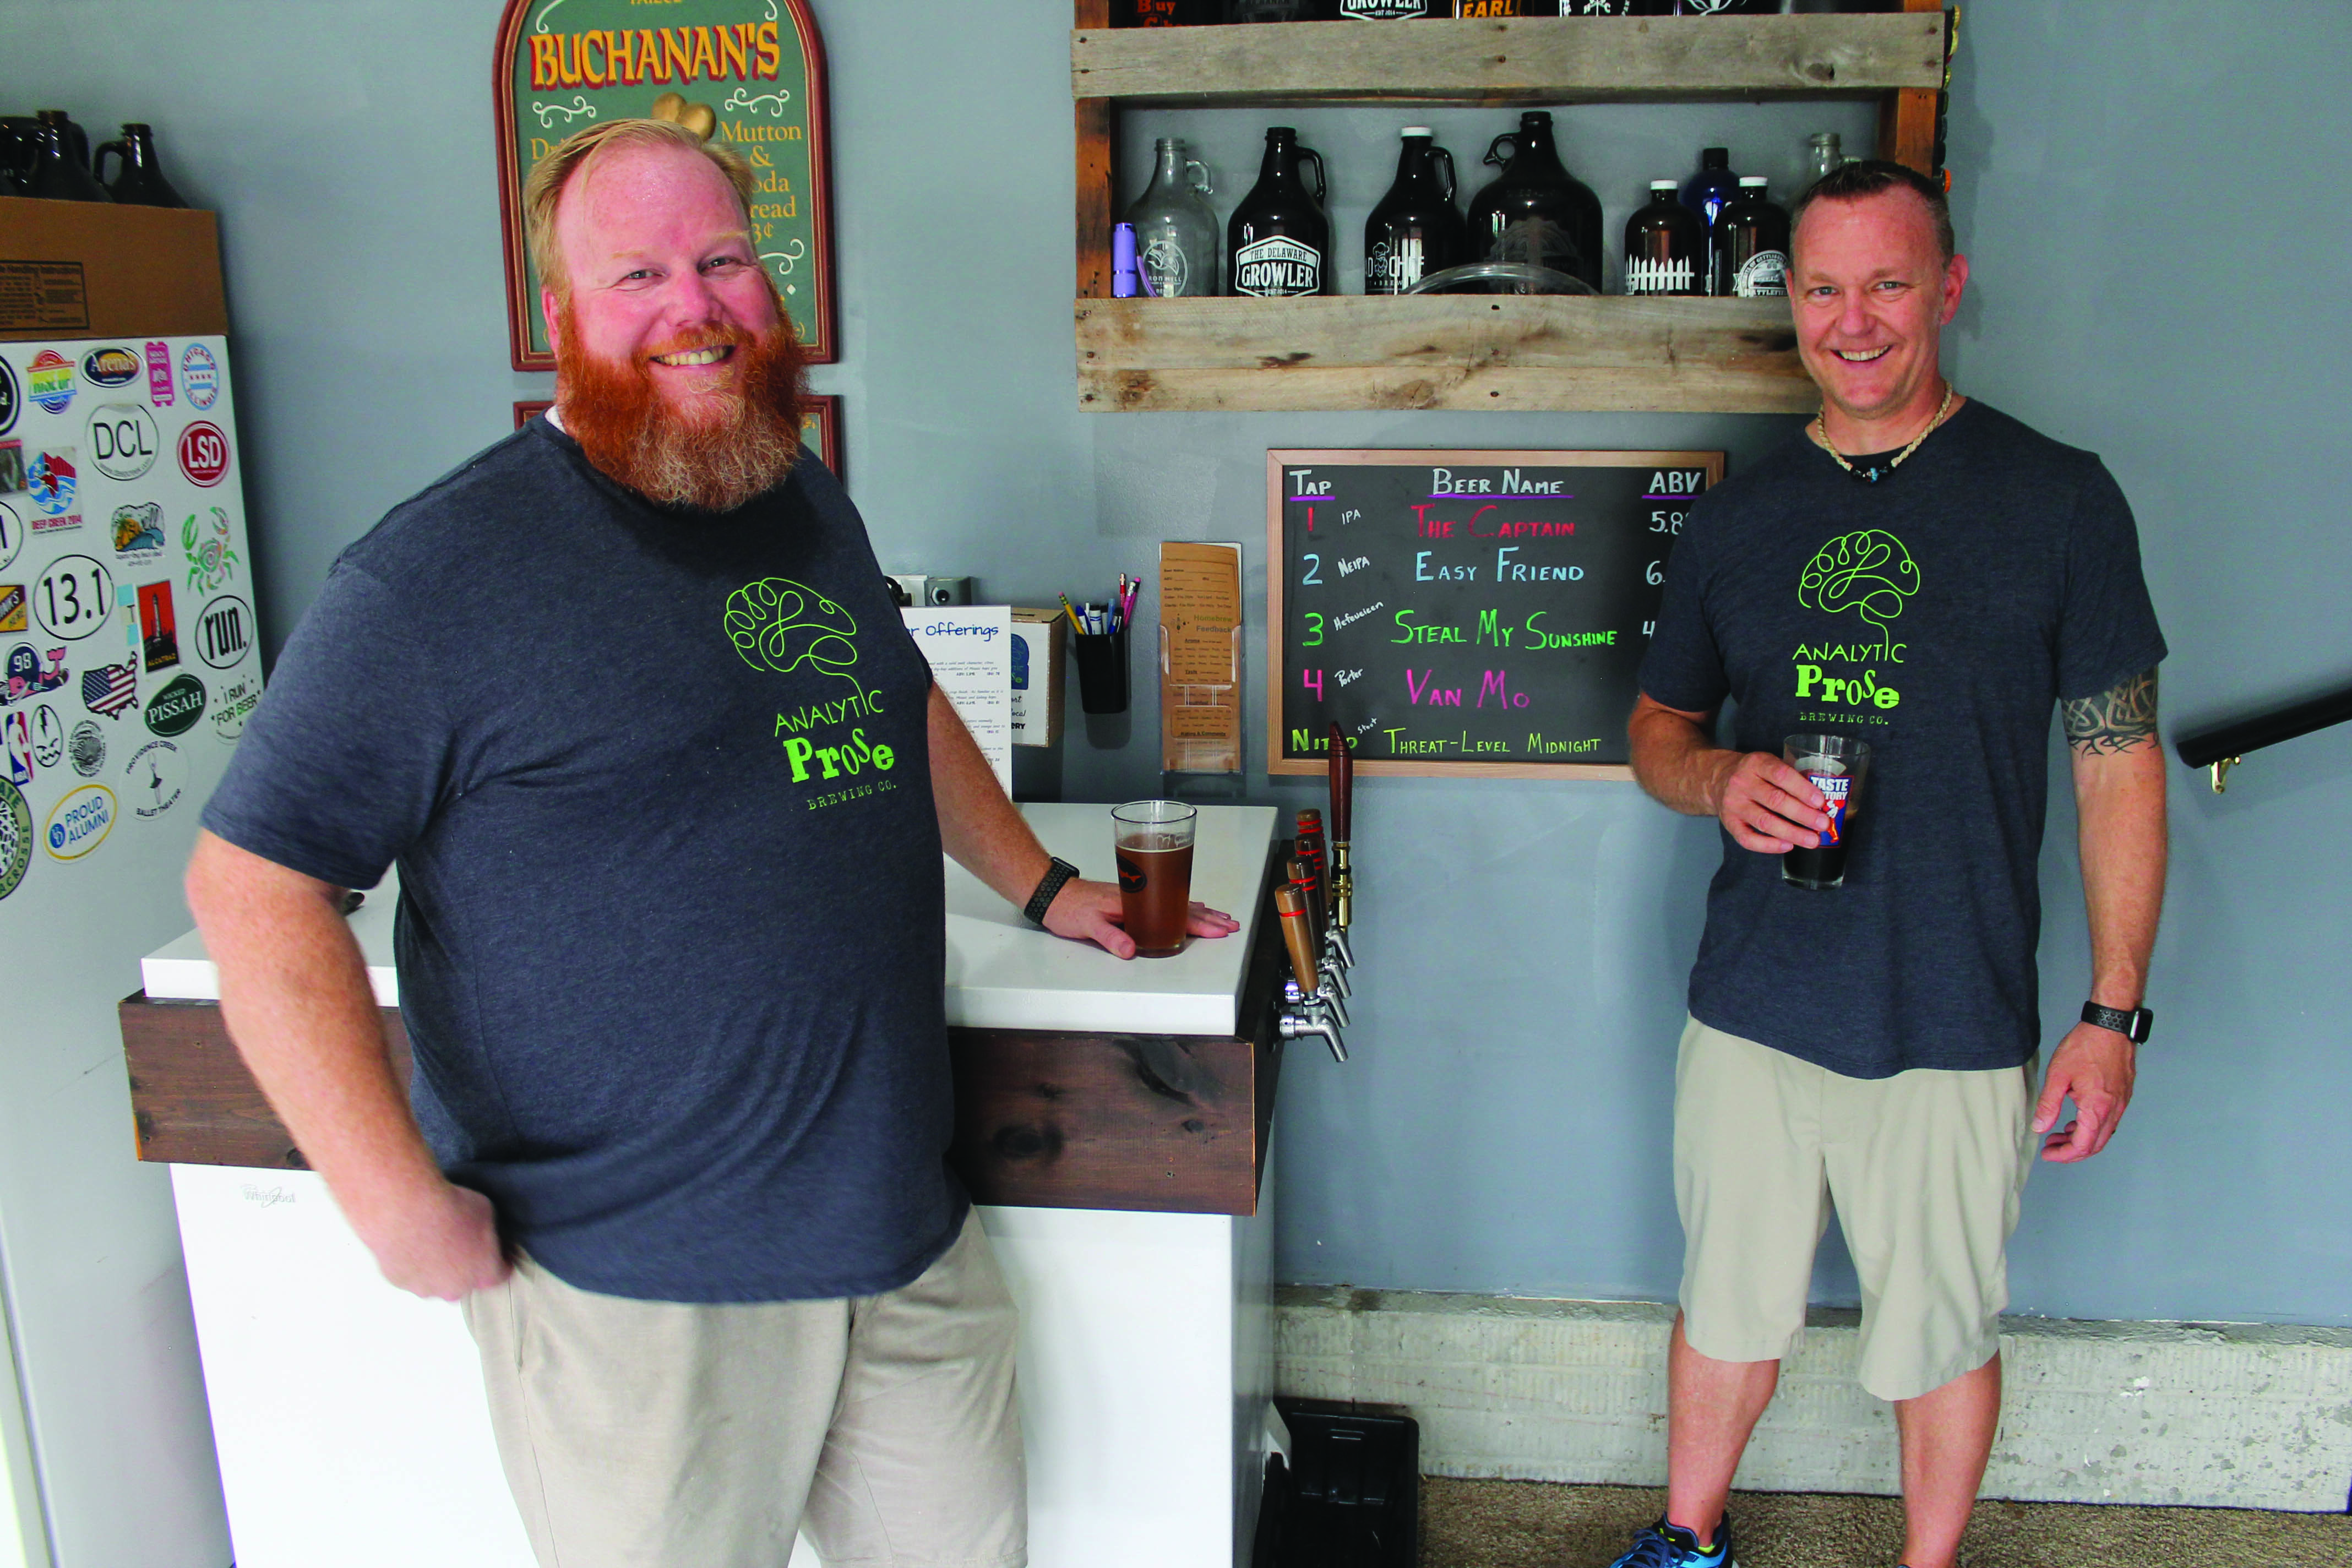 Dan Semenick and Ryan Buchanan in their home-brewery.